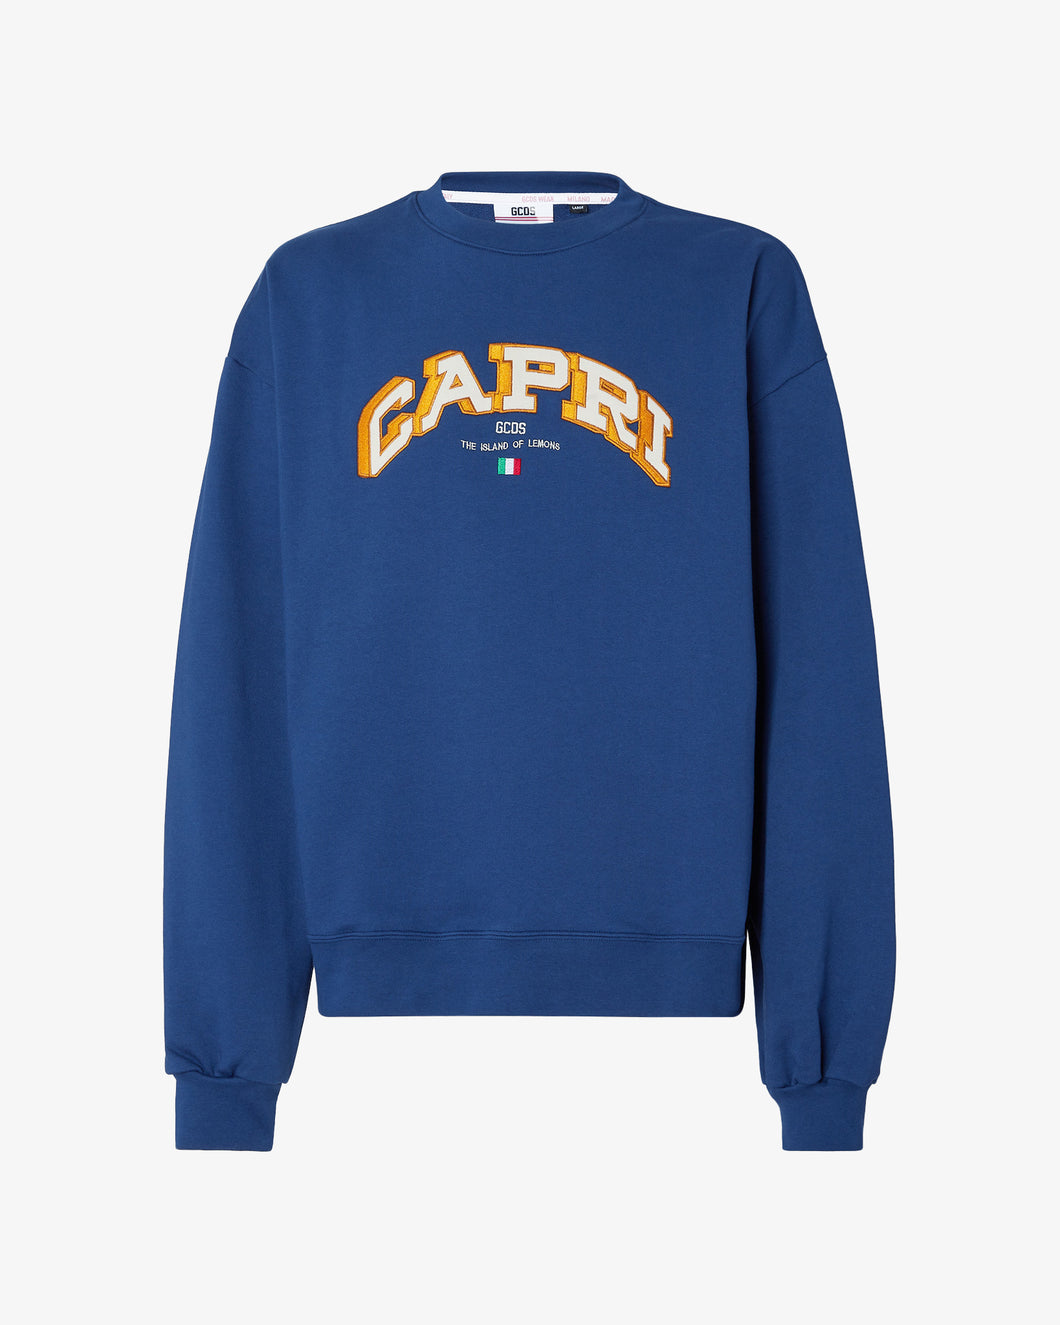 Capri Oversized Crewneck Sweatshirt